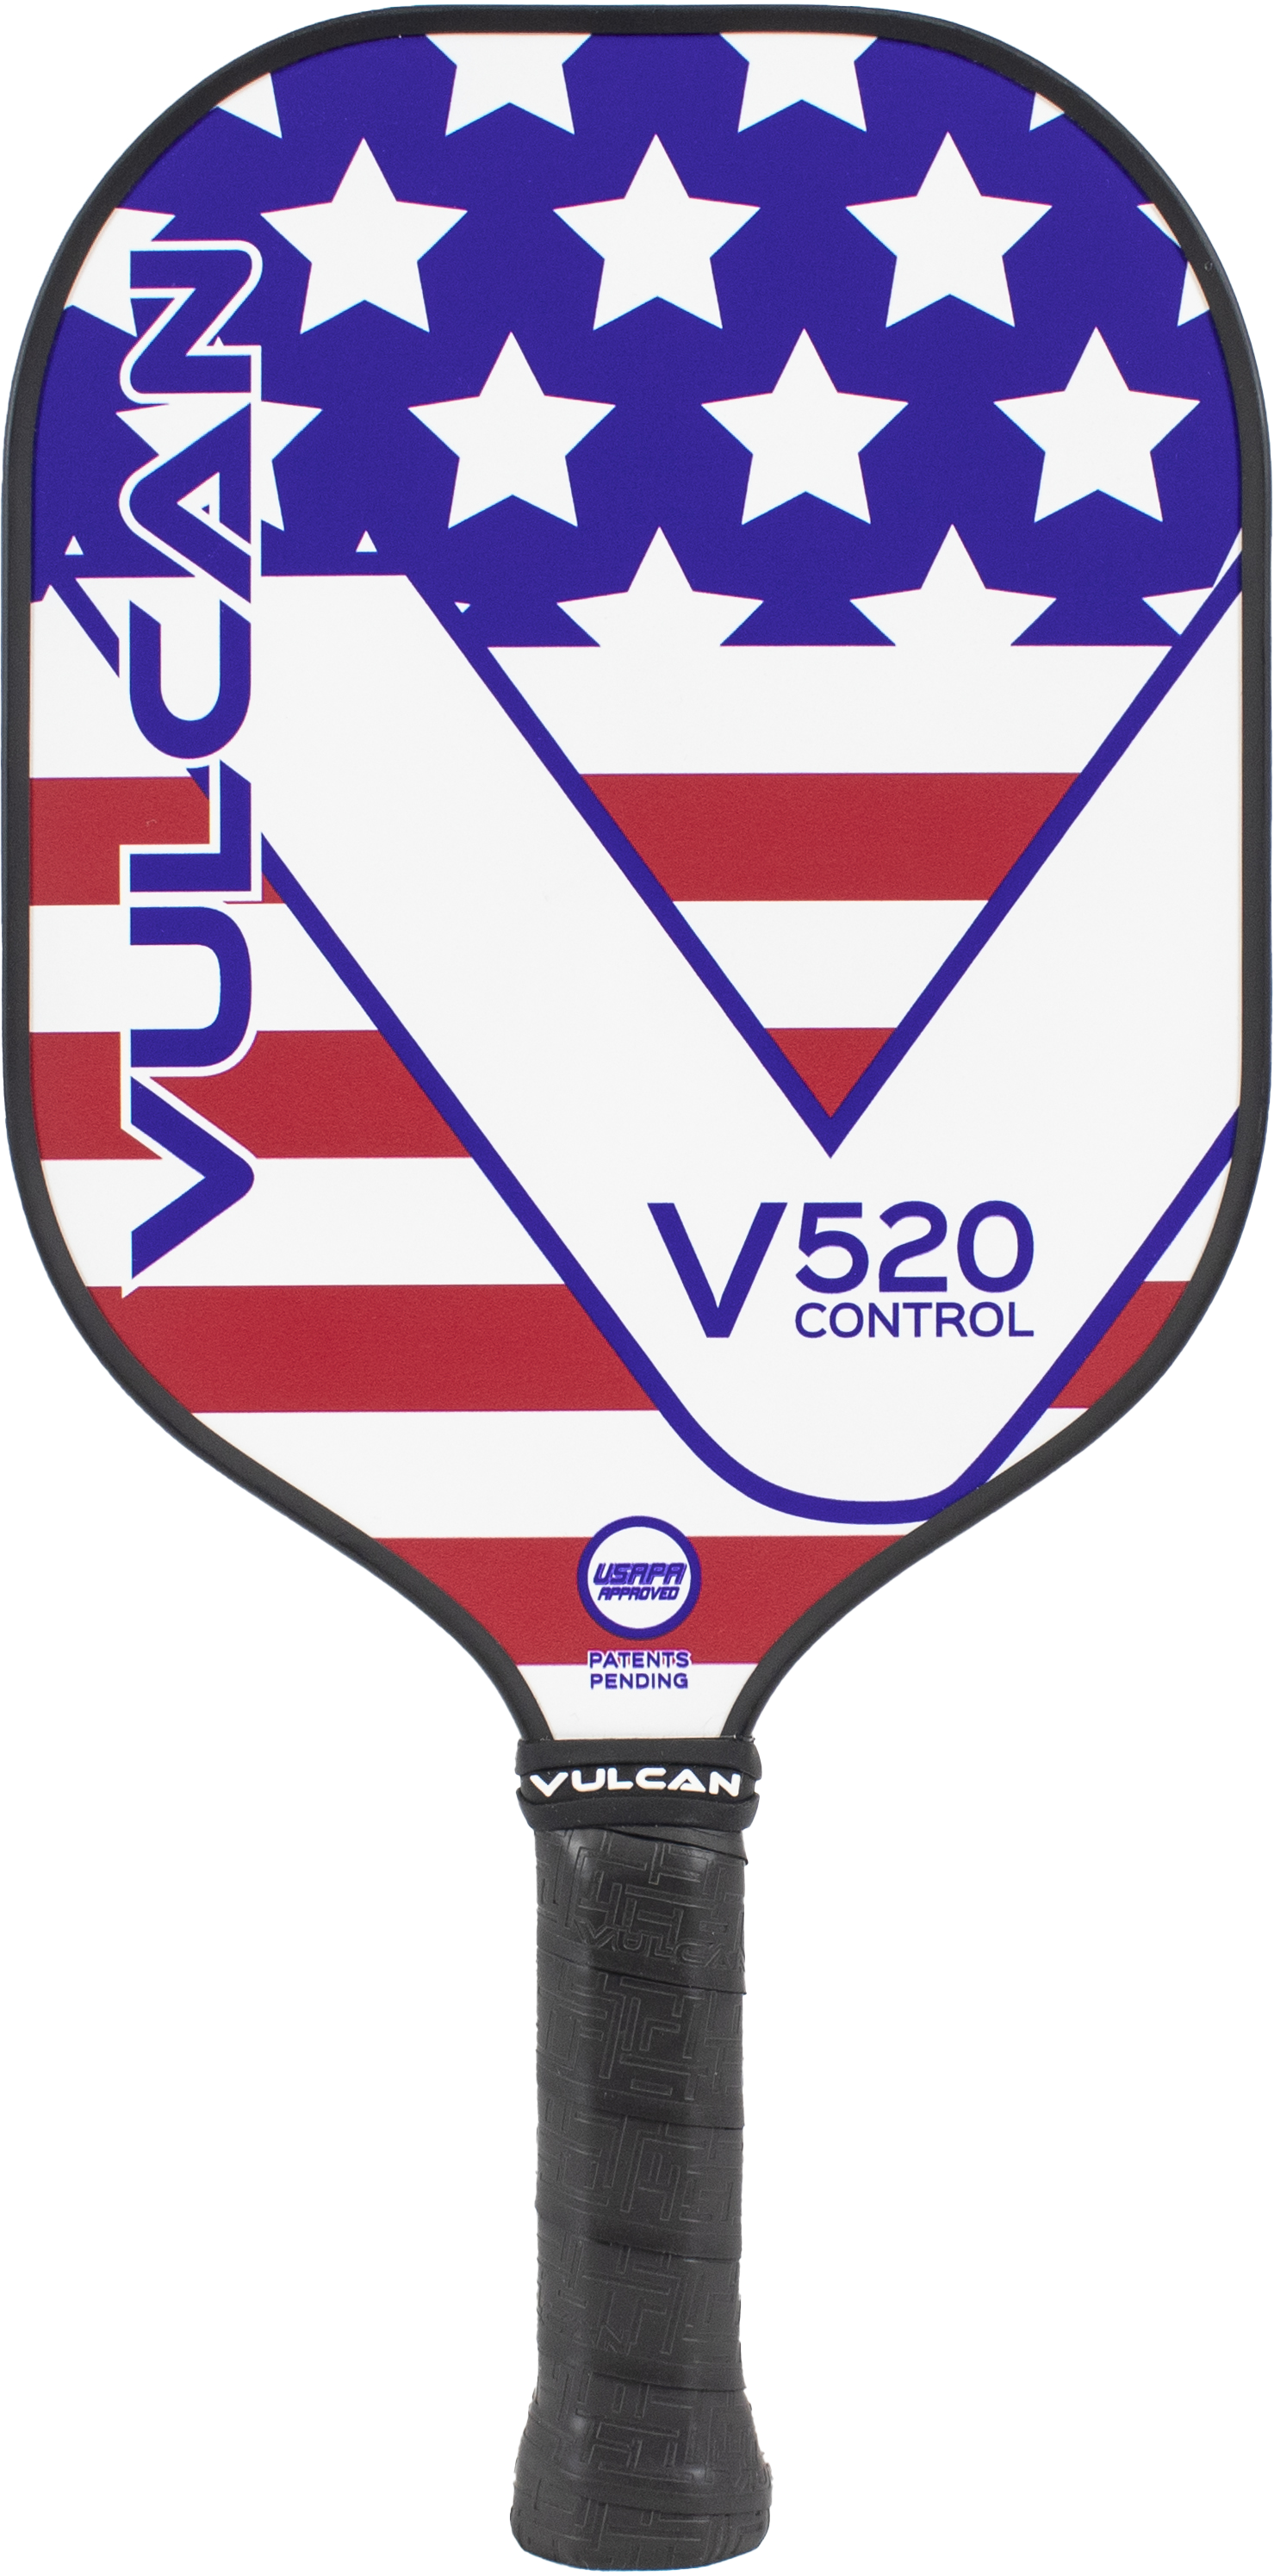 An Americana-themed Vulcan V520 Control Pickleball Paddle by Vulcan.